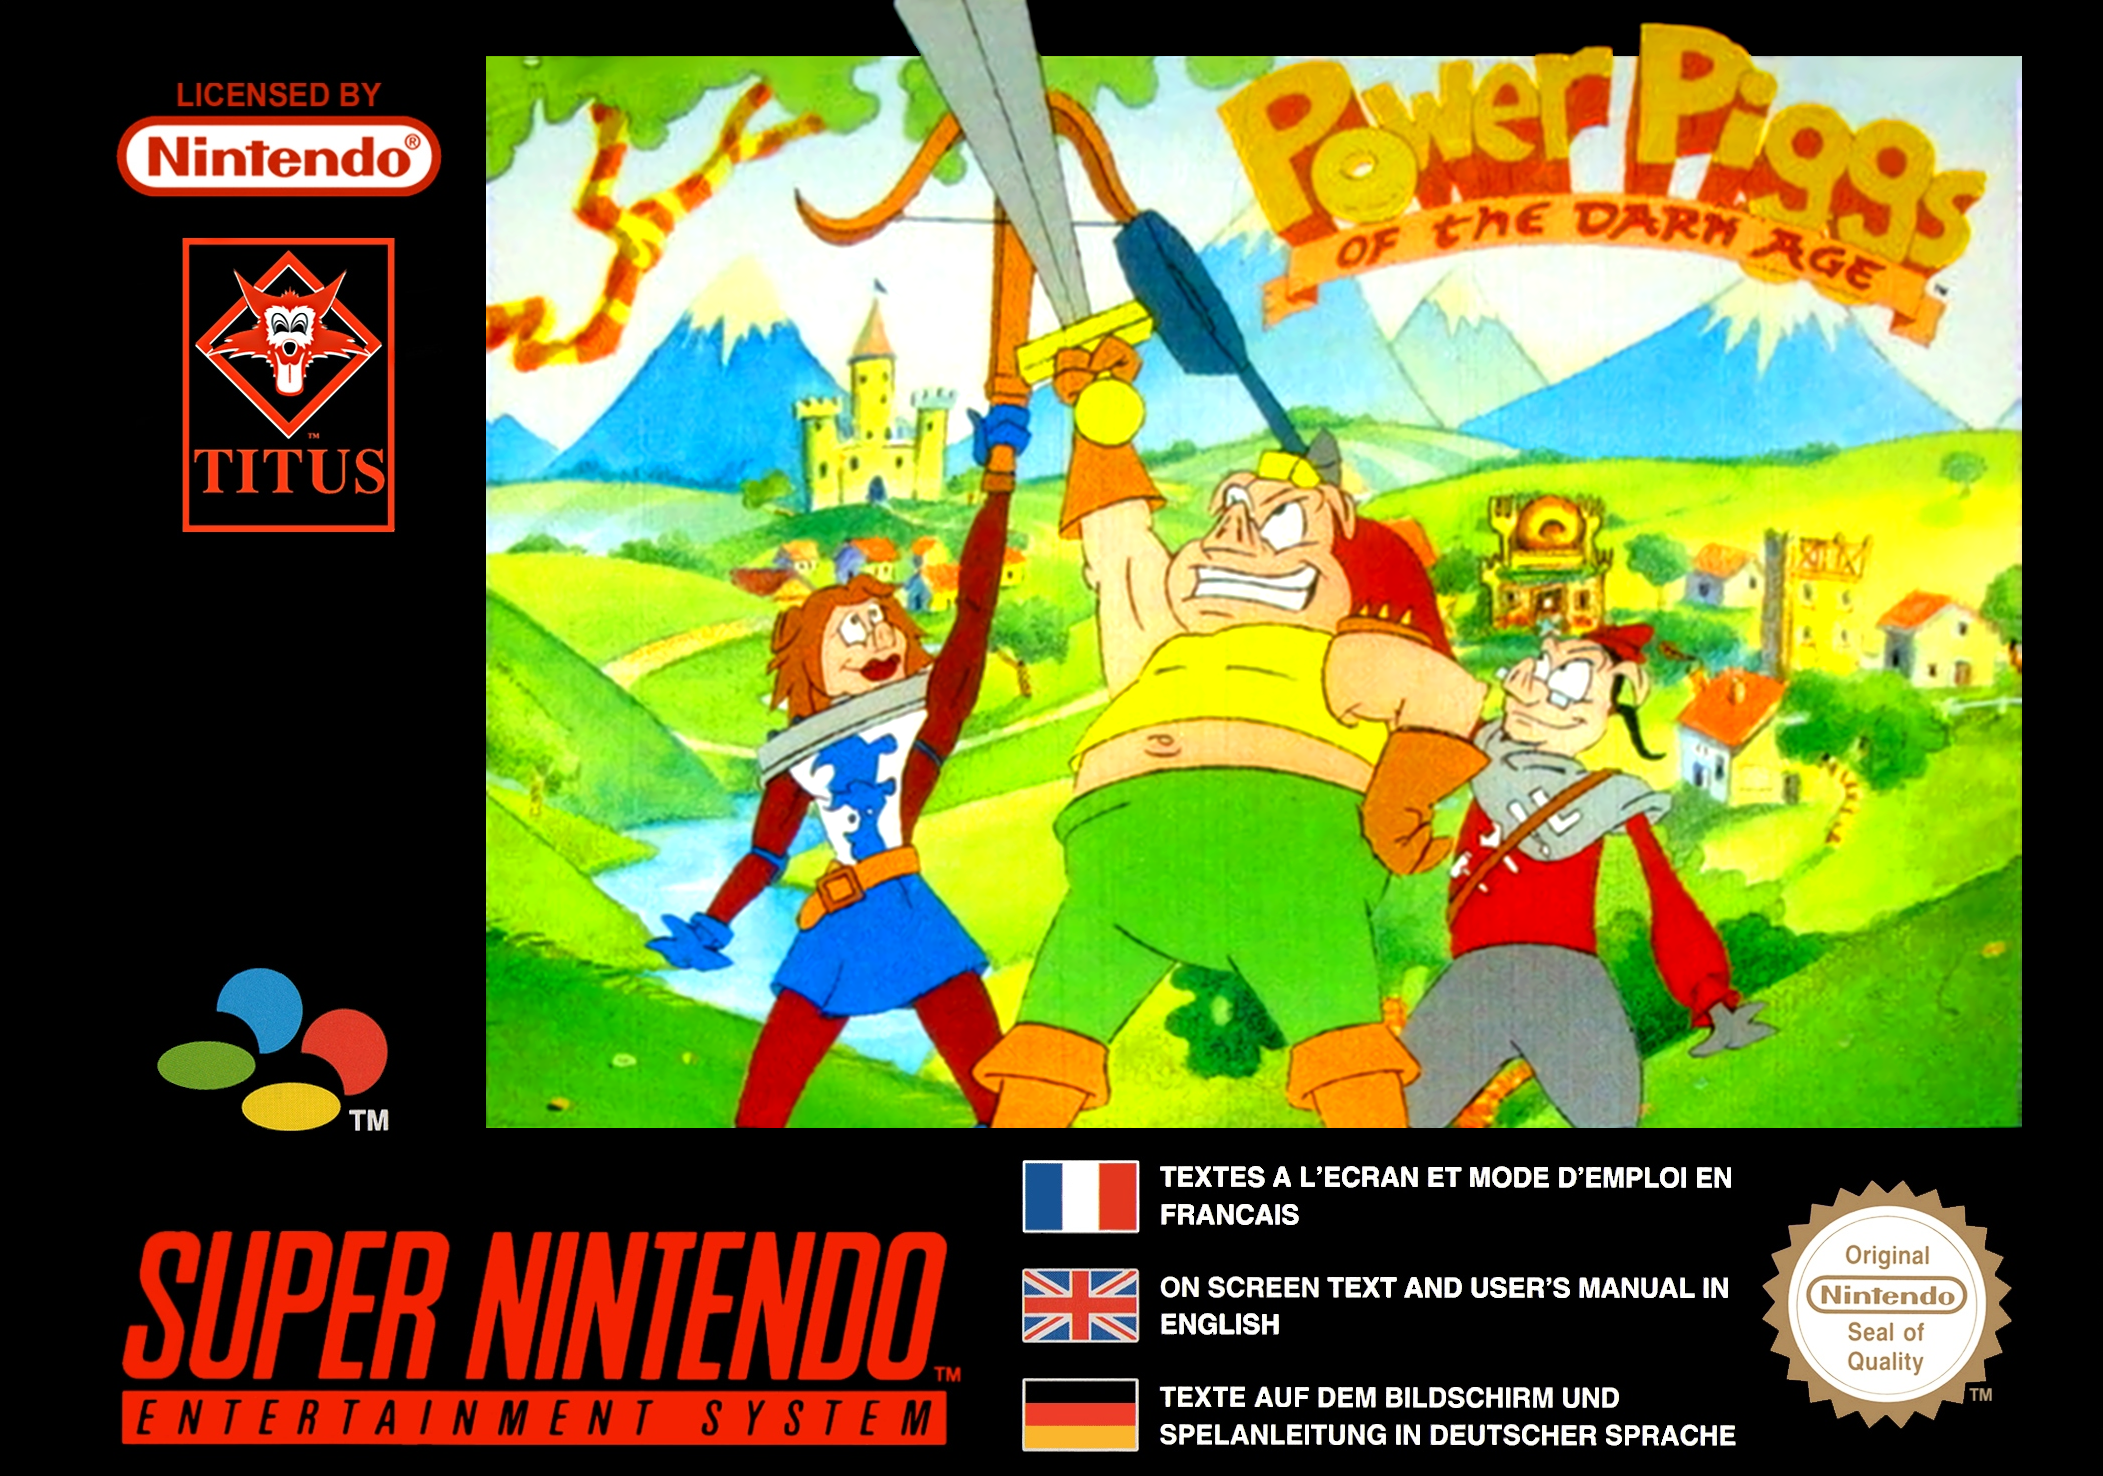 Game | Super Nintendo SNES | Power Piggs Of The Dark Age